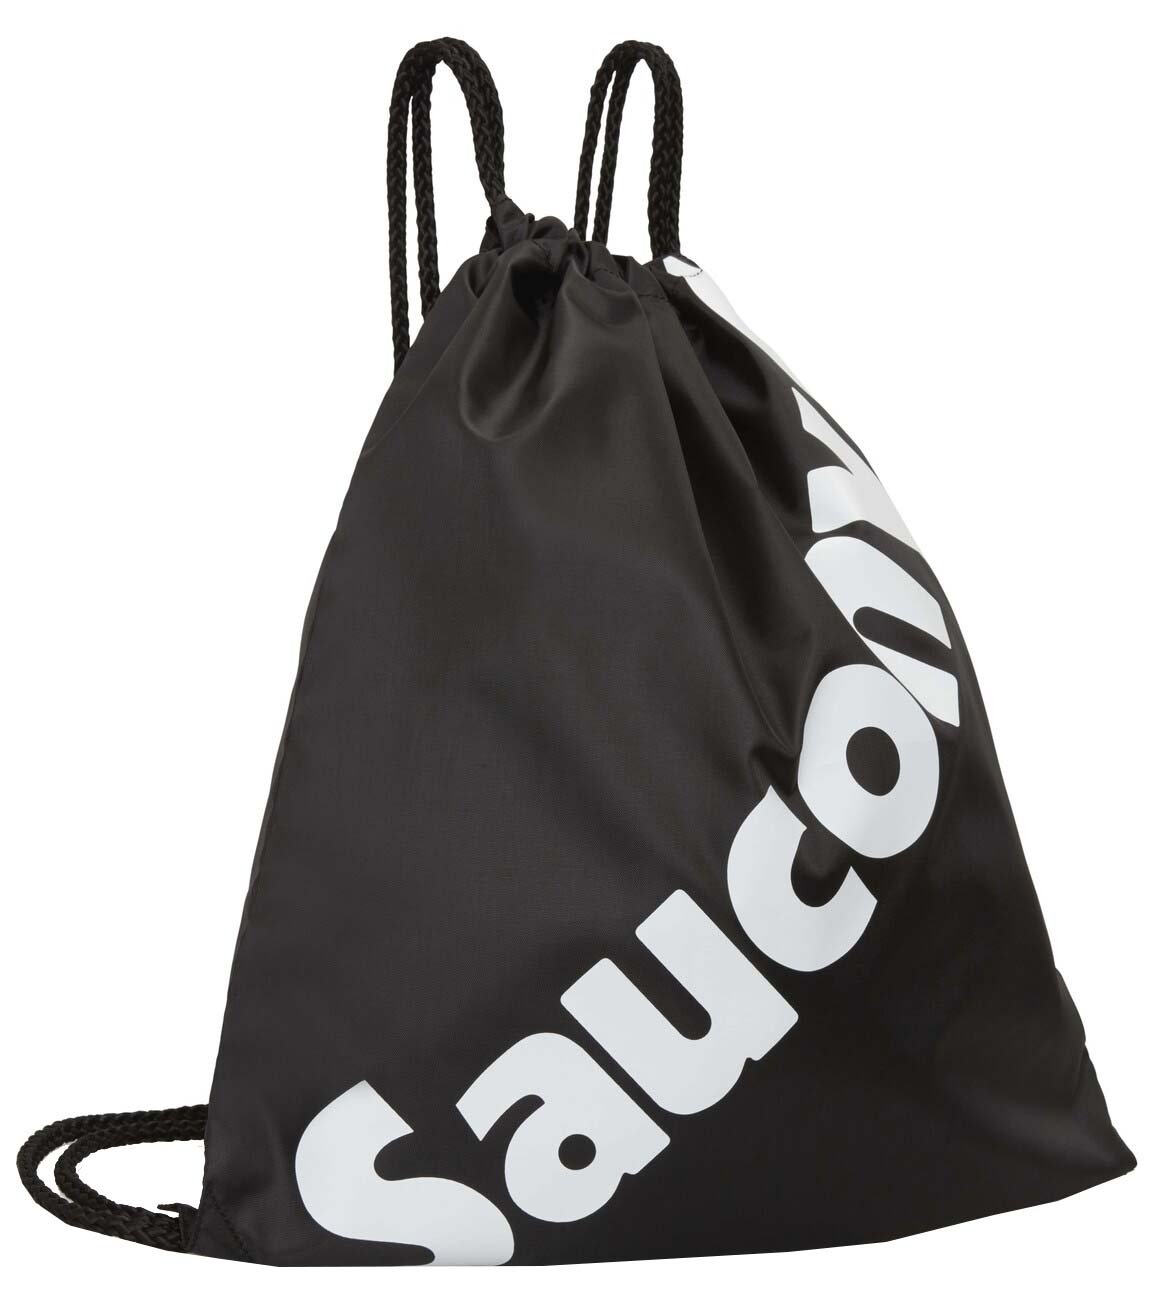 Рюкзак Saucony String Bag, Black, 2021, SAU900016_BK кепка велосипедная saucony doubleback hat black 2021 sau900014 bk